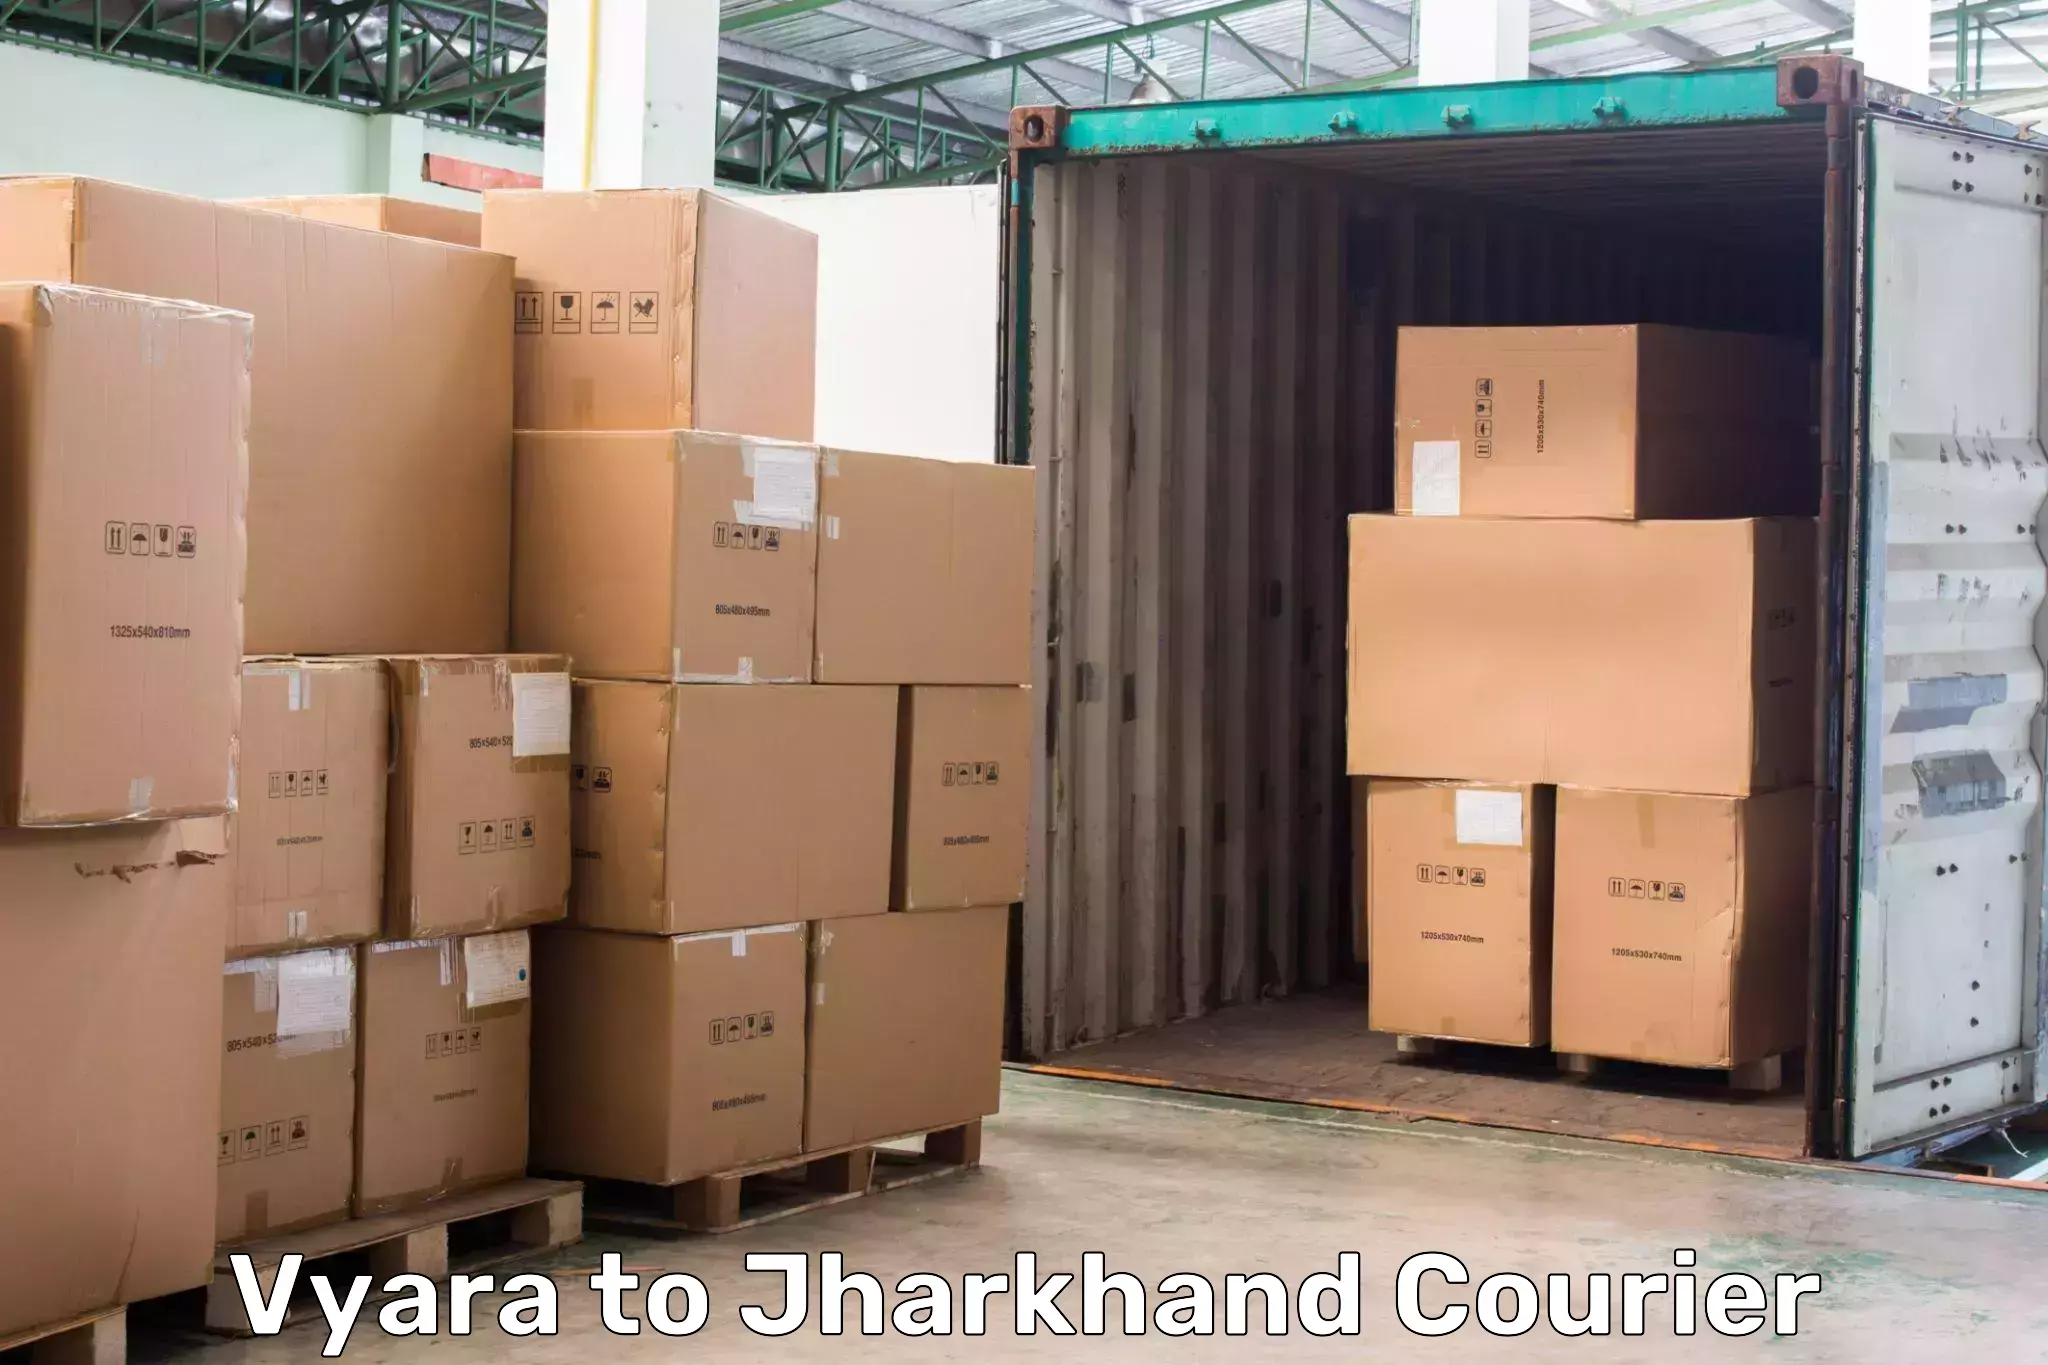 Reliable parcel services Vyara to Ranchi